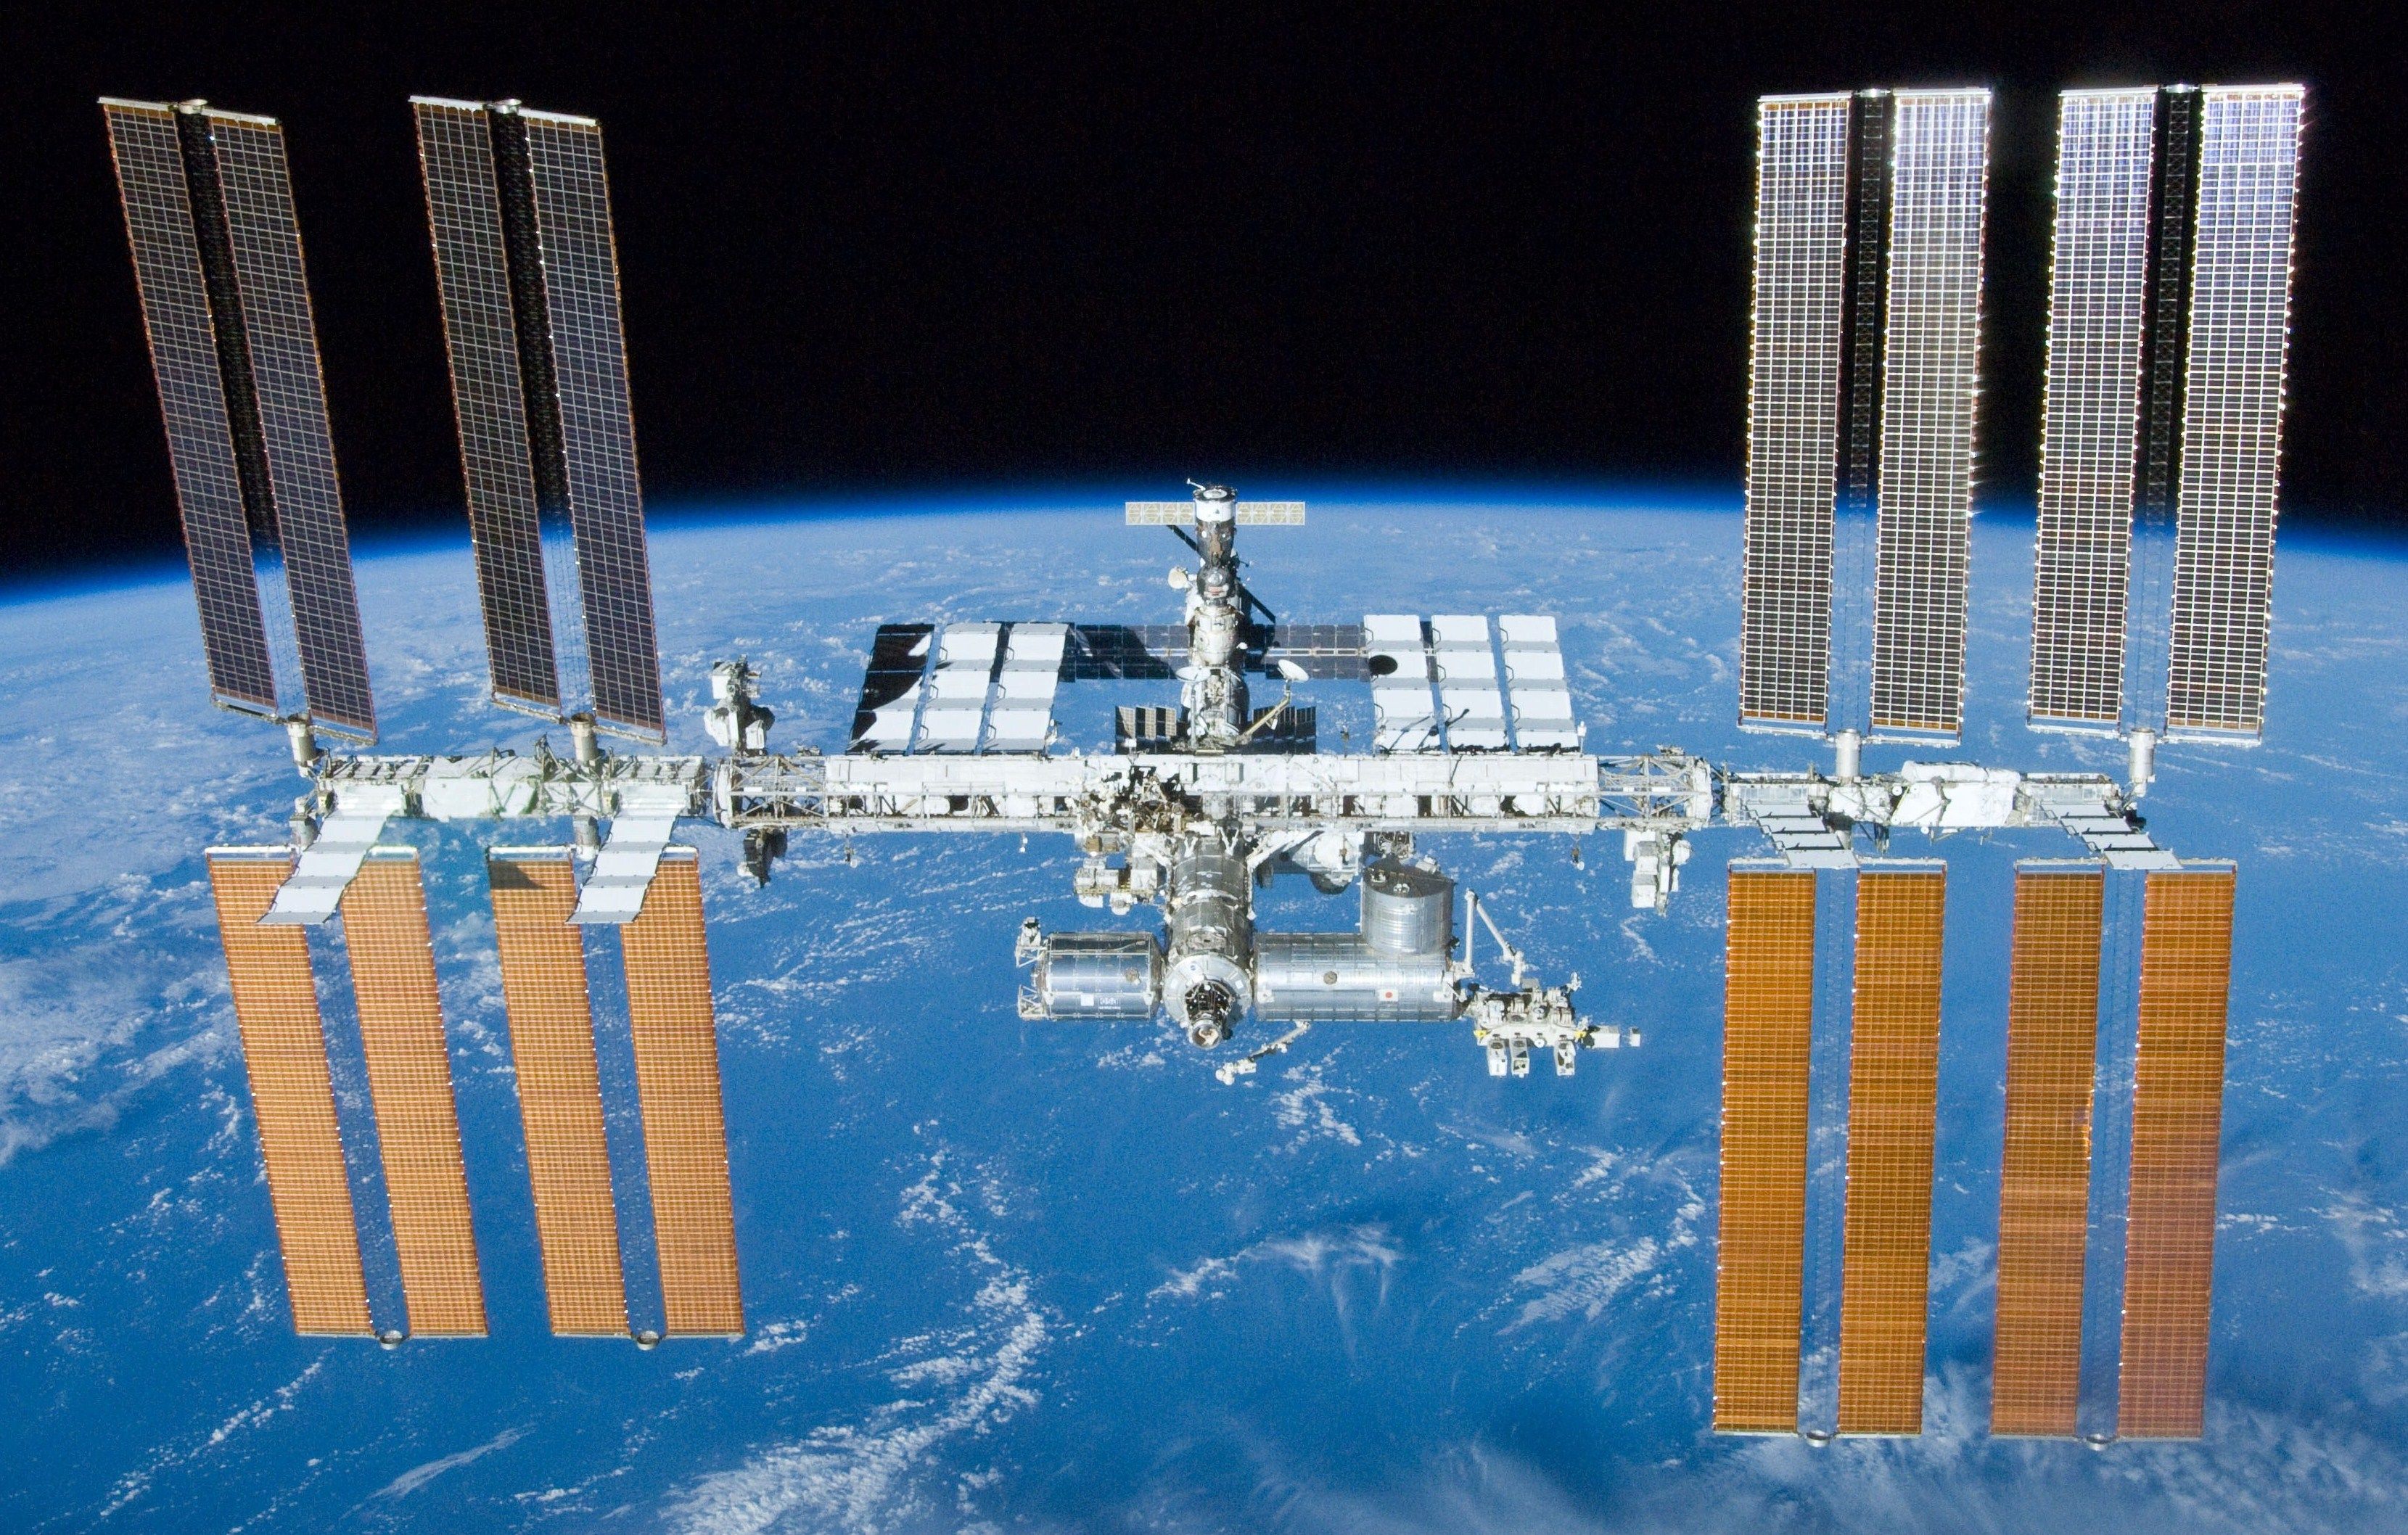 Kierkegaard work now in orbit on the ISS